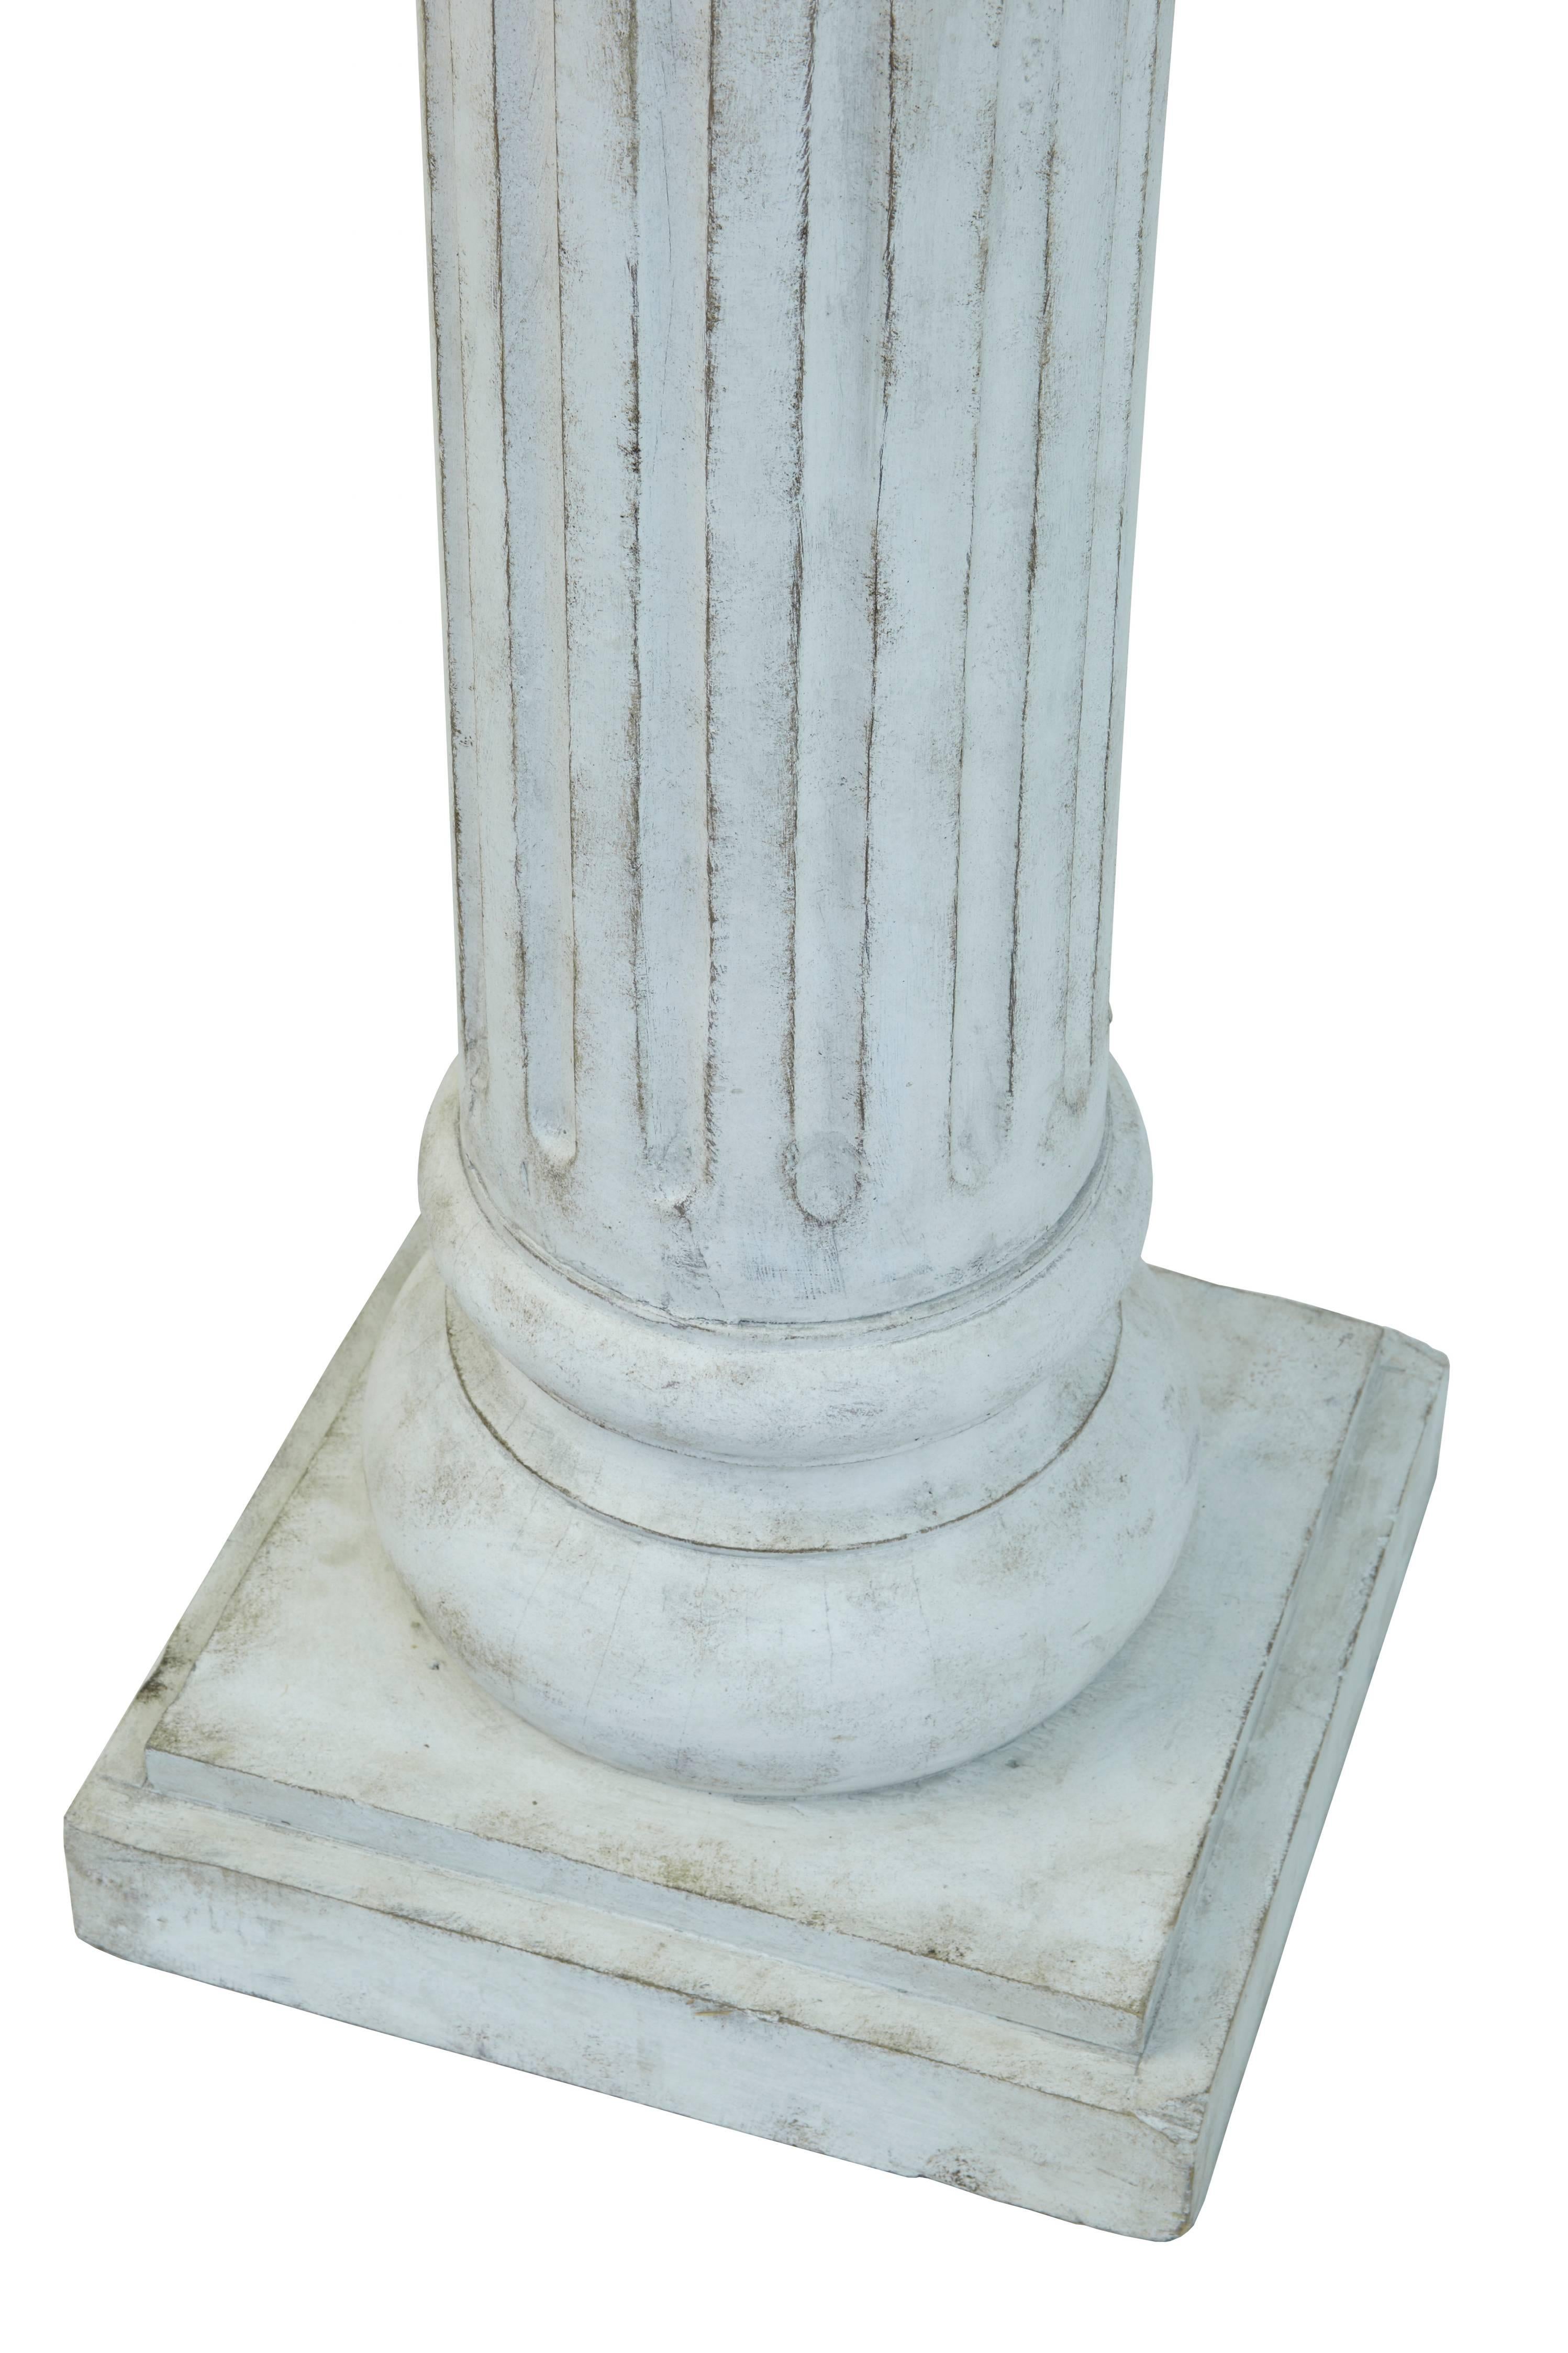 large columns